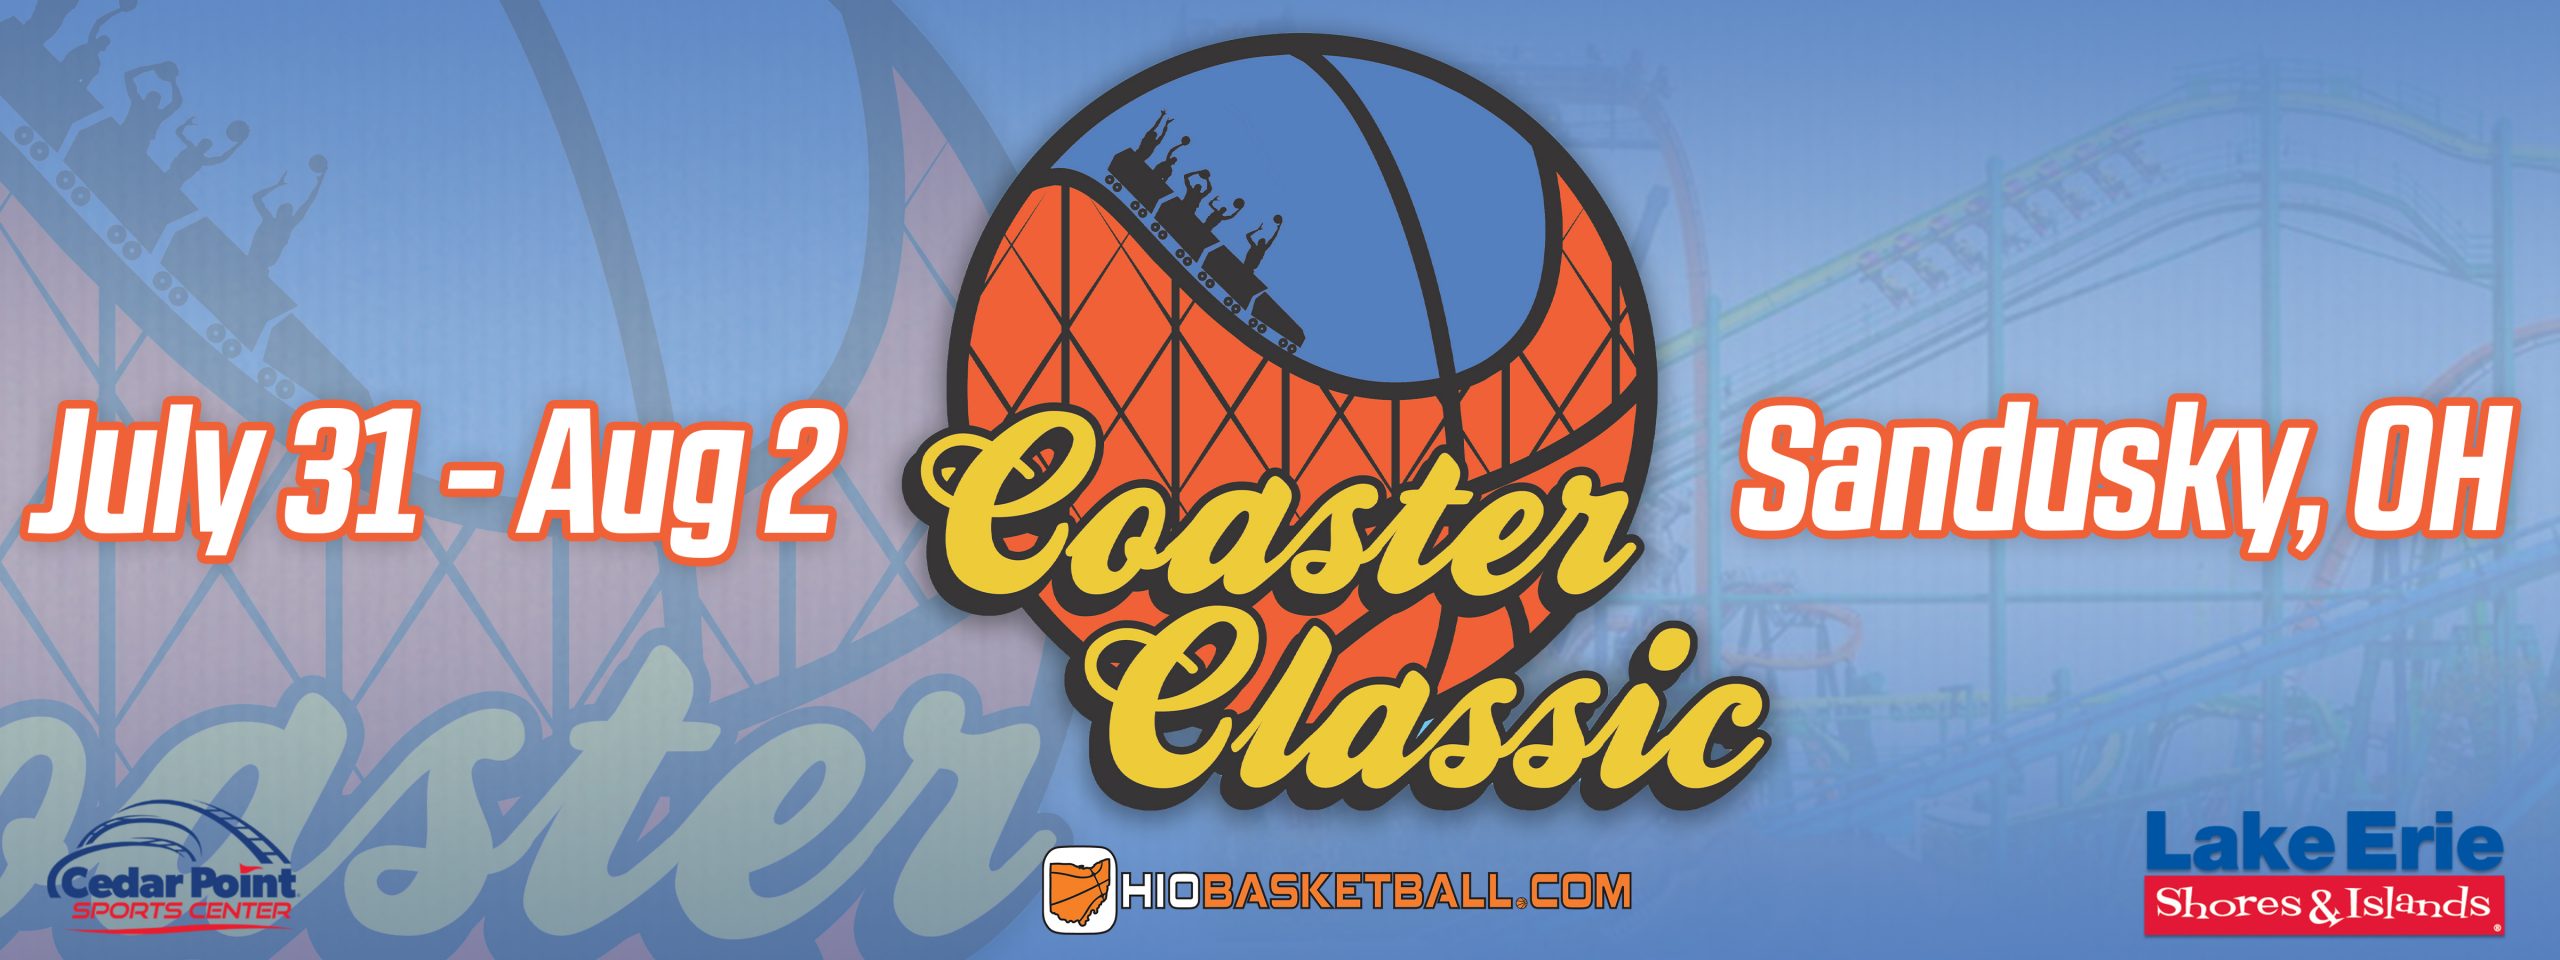 Coaster Classic Basketball Tournament